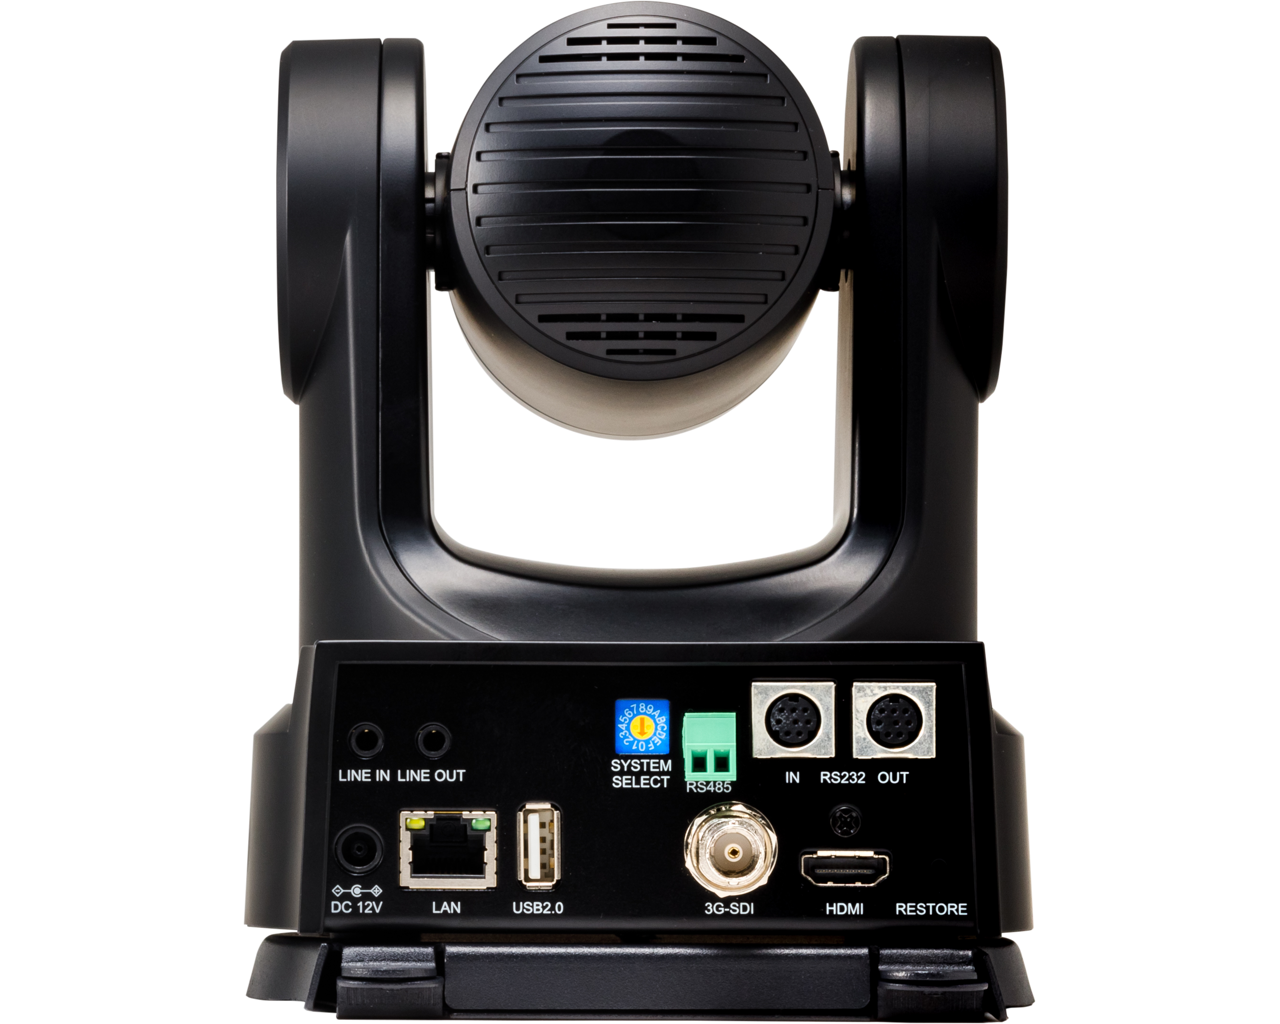 JVC  KY-PZ200NBE HD PTZ camera, black, 20x zoom, with NDI, dual streaming